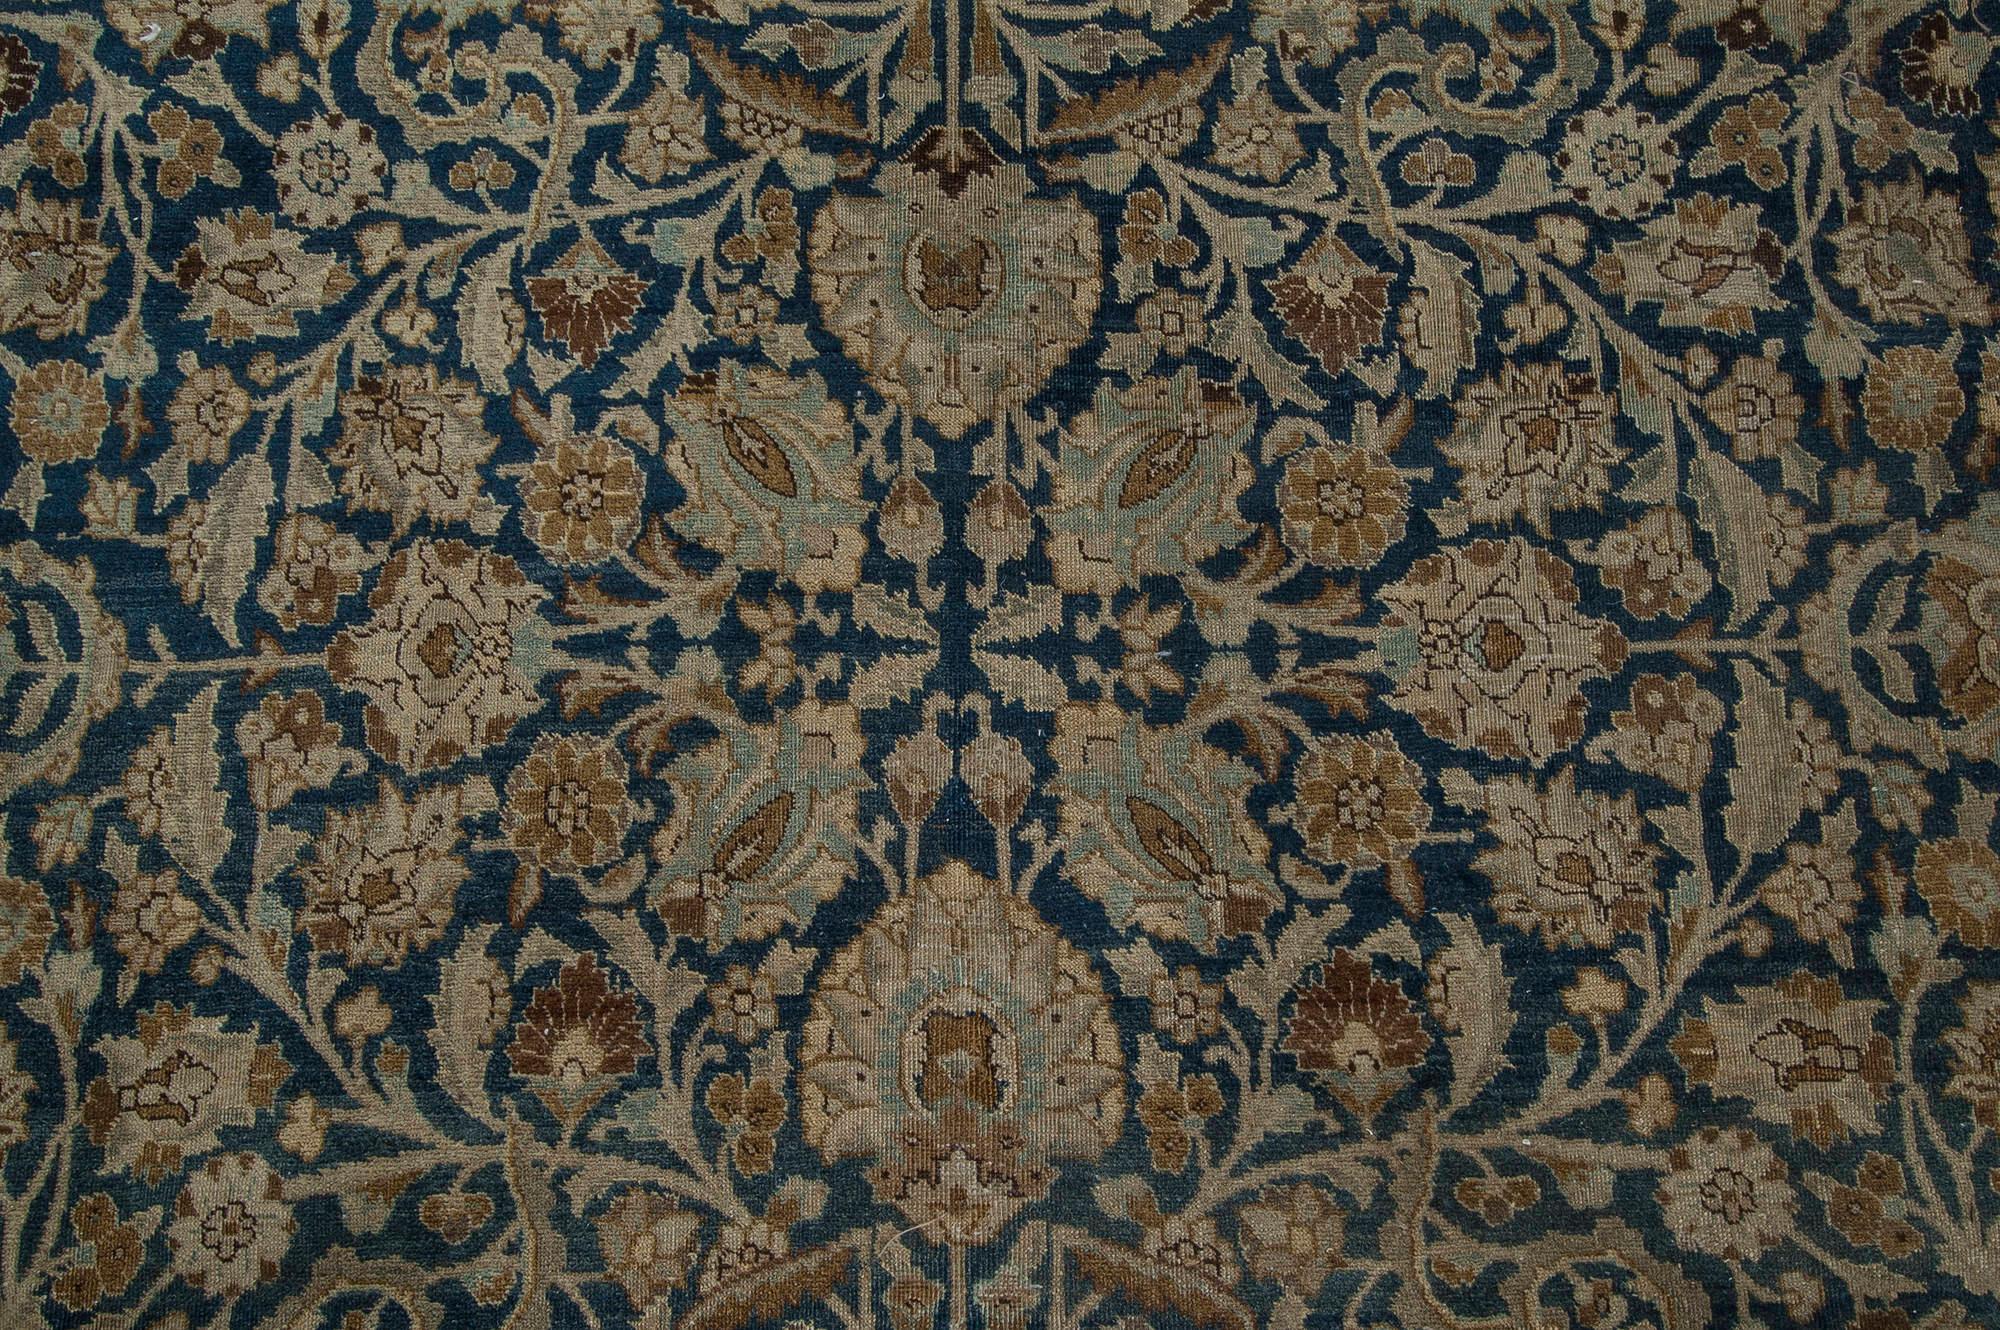 Antique Persian Tabriz handwoven wool rug
Size: 12'6